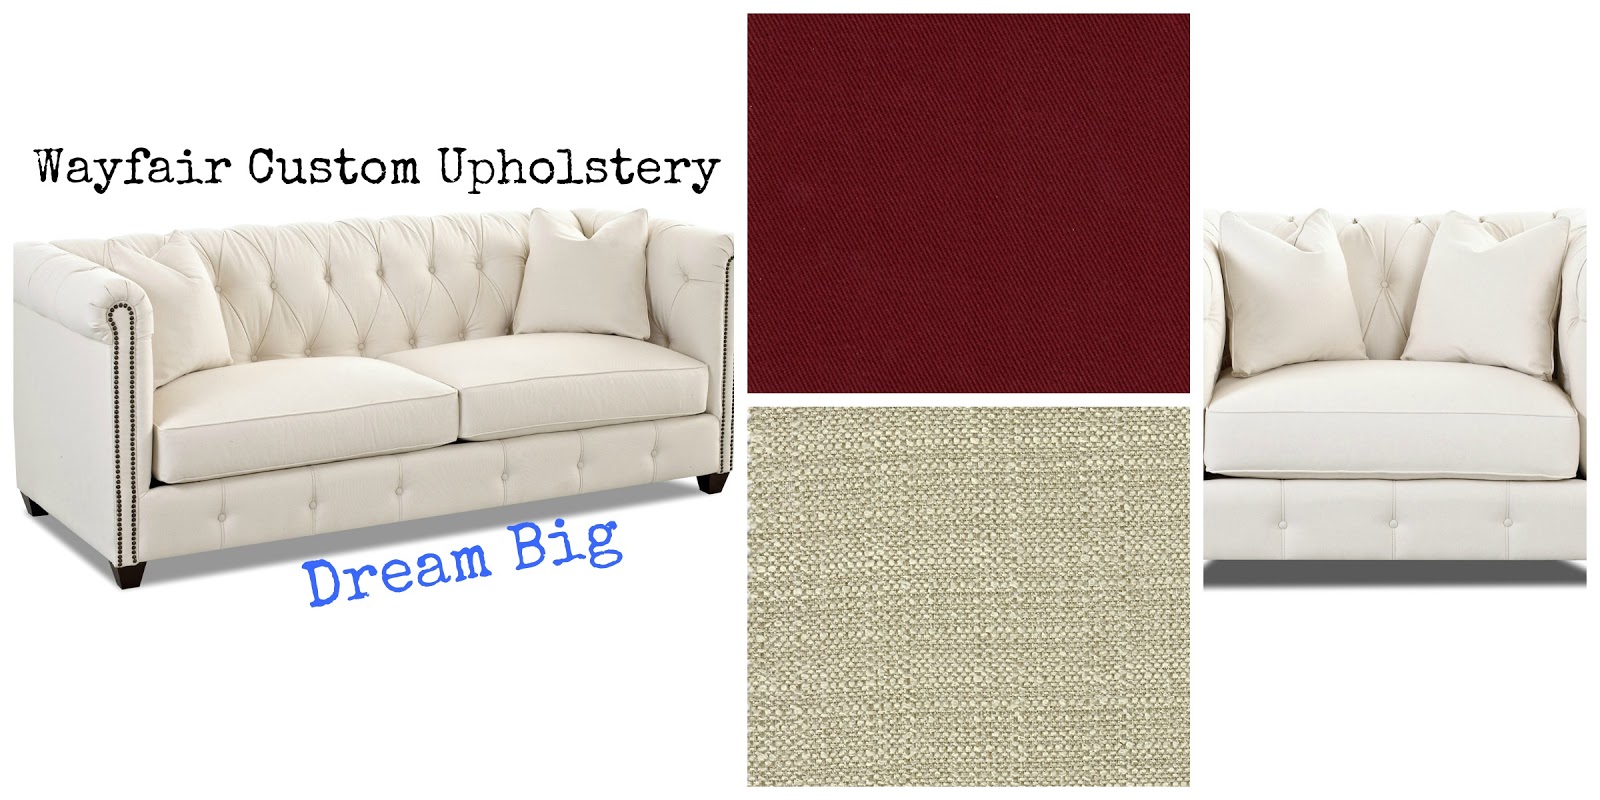 Wayfair Custom Upholstery